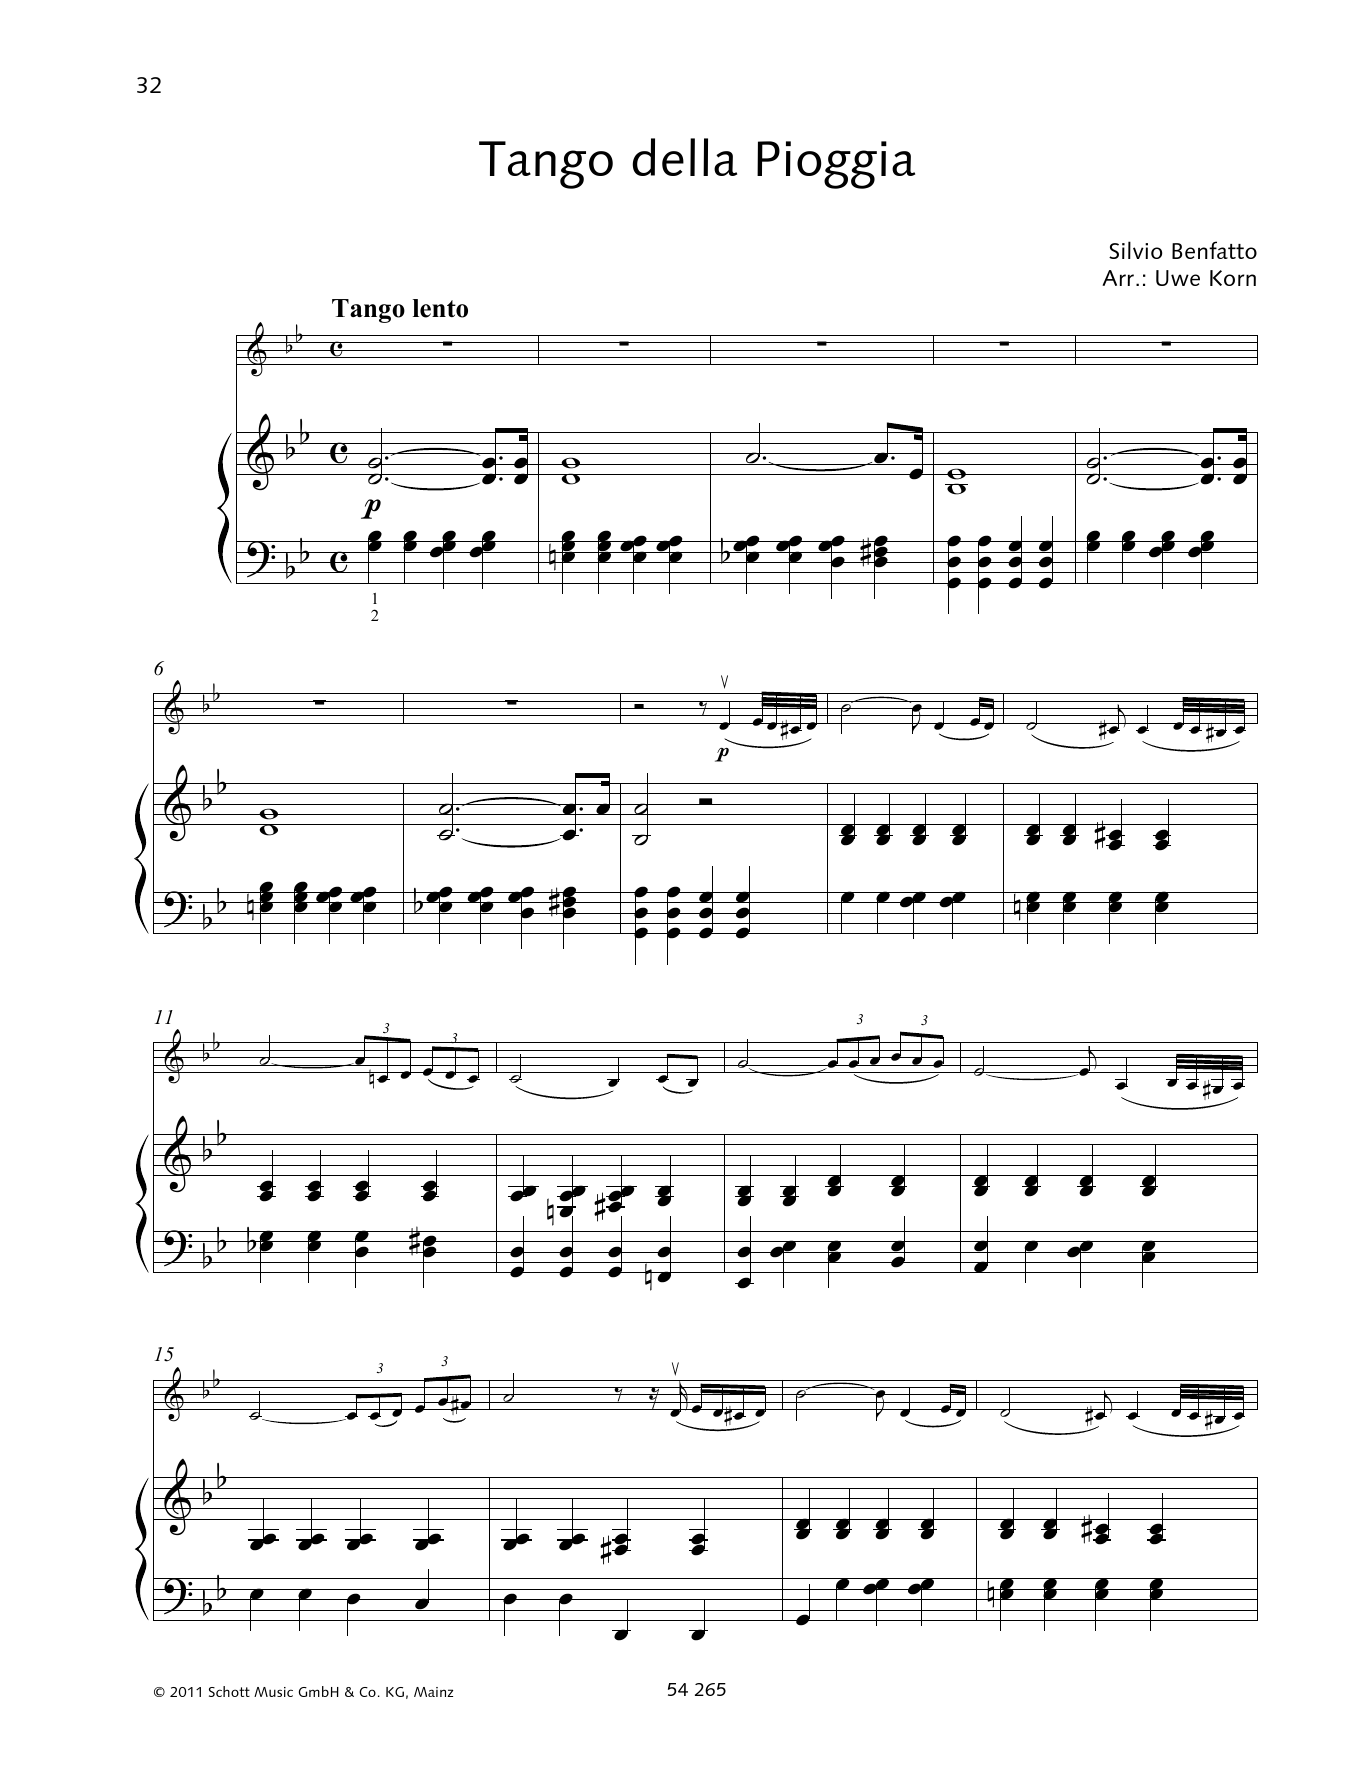 Silvio Benfatto Tango della Piogga Sheet Music Notes & Chords for String Solo - Download or Print PDF